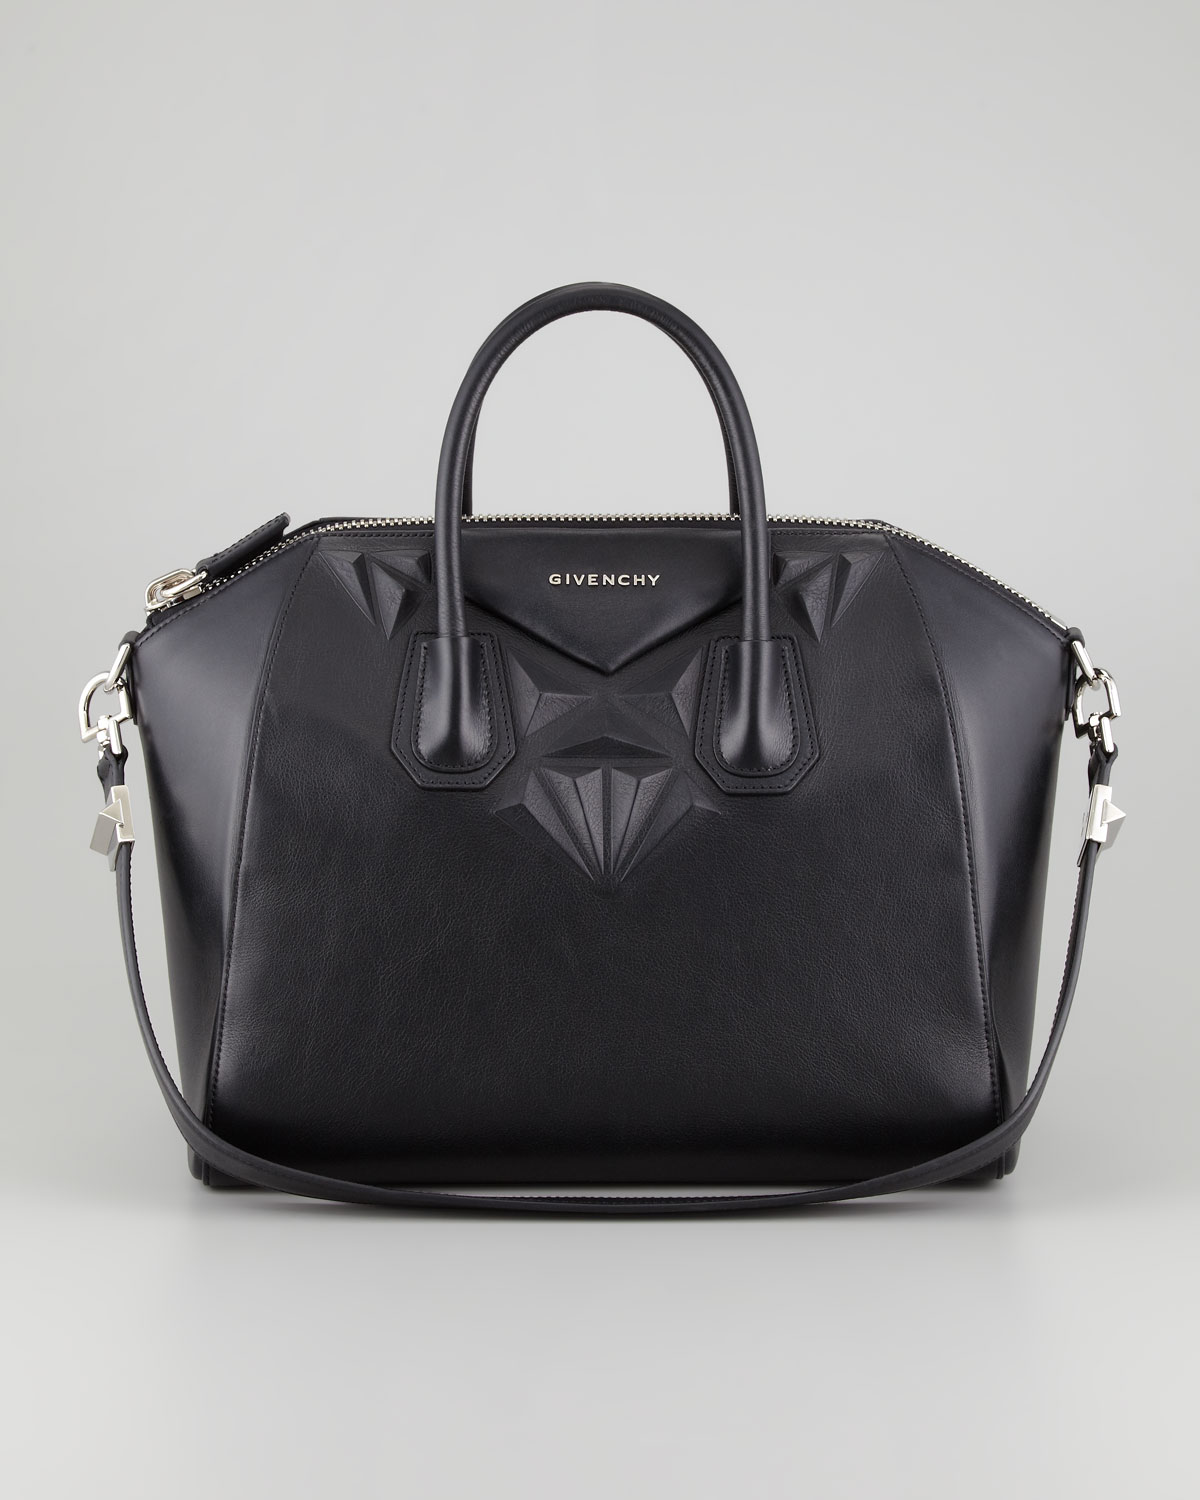 Givenchy Antigona 3d Stud Medium Satchel Bag Black in Black | Lyst